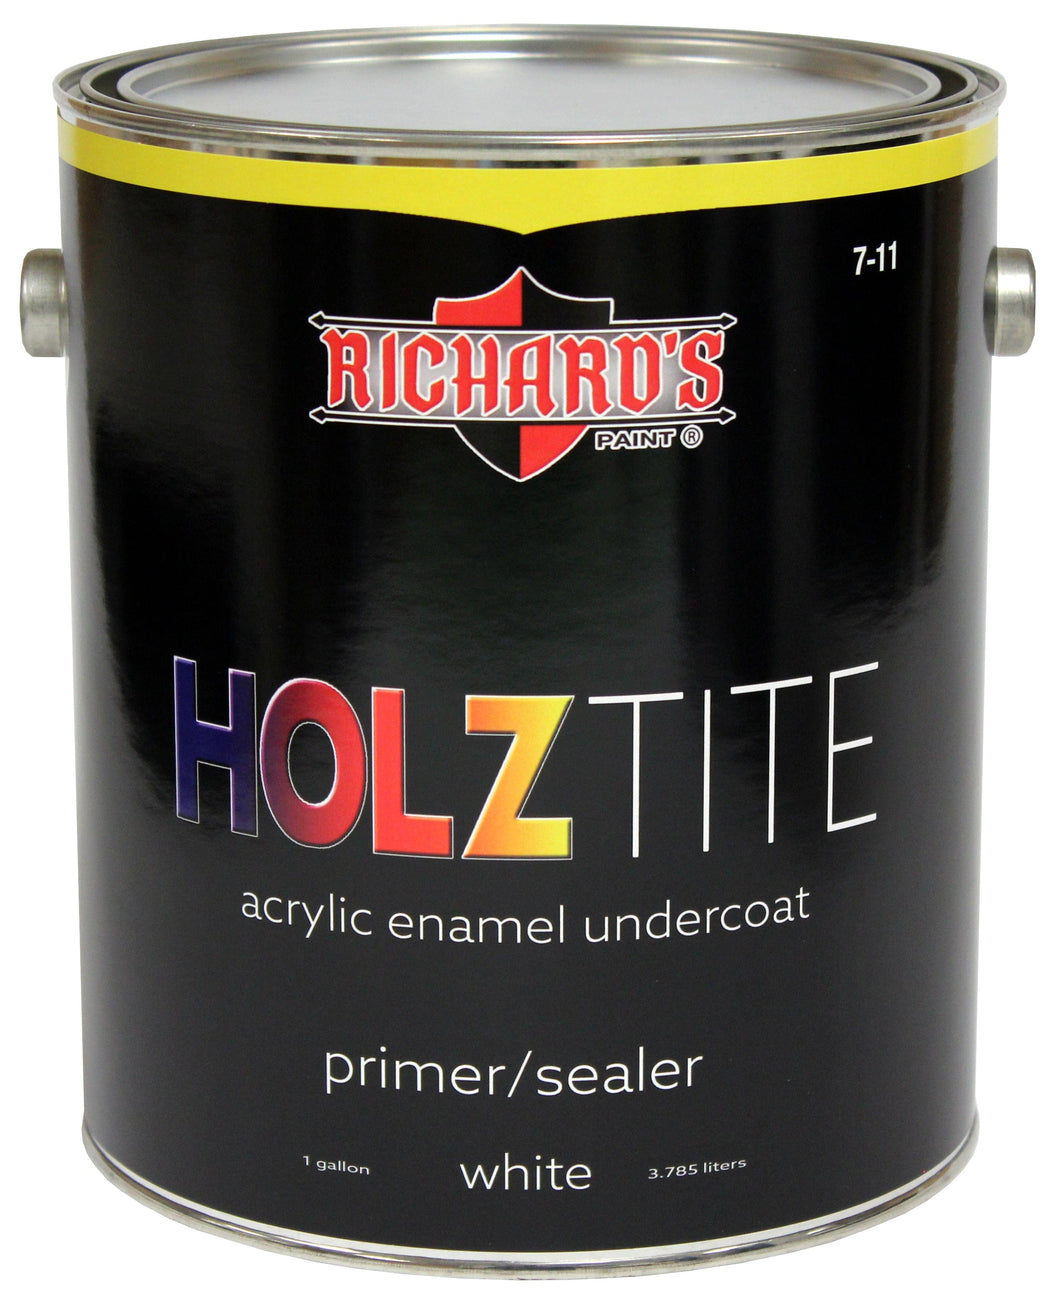 Richard's #7-11 HolzTITE Acrylic Enamel Undercoat